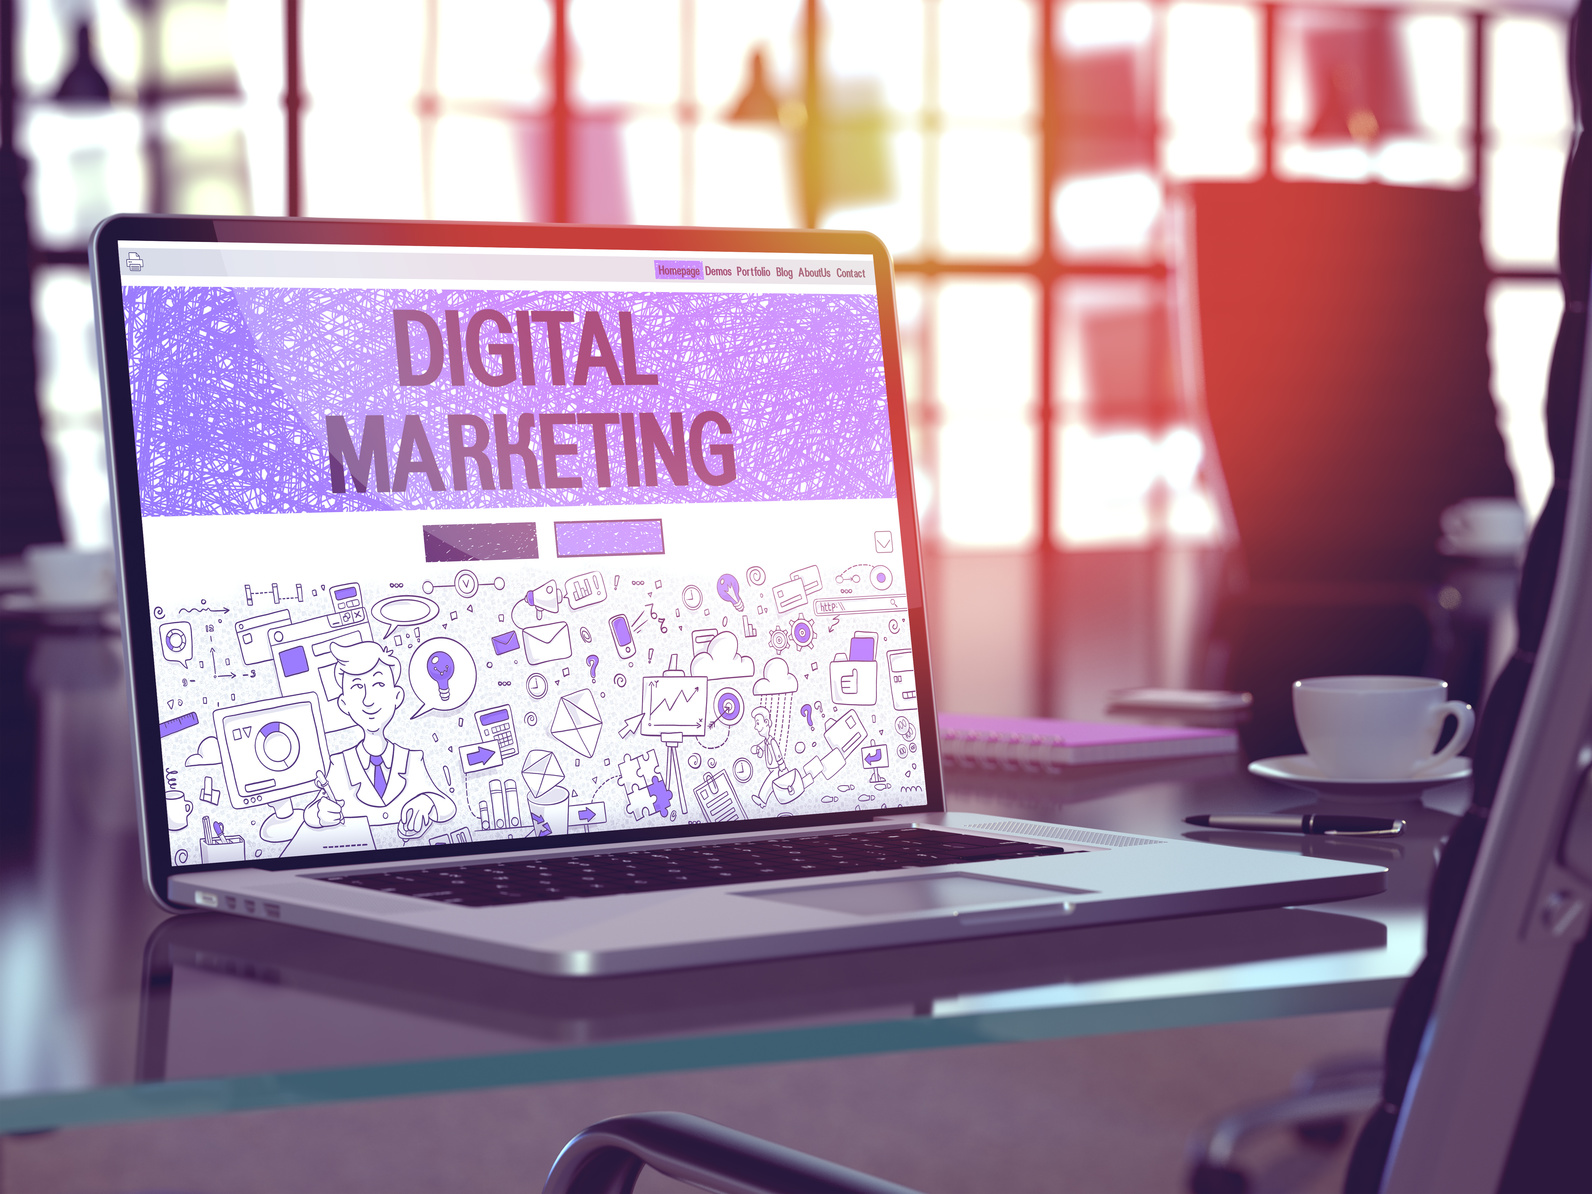 Four Key Tips to Successful Digital Marketing